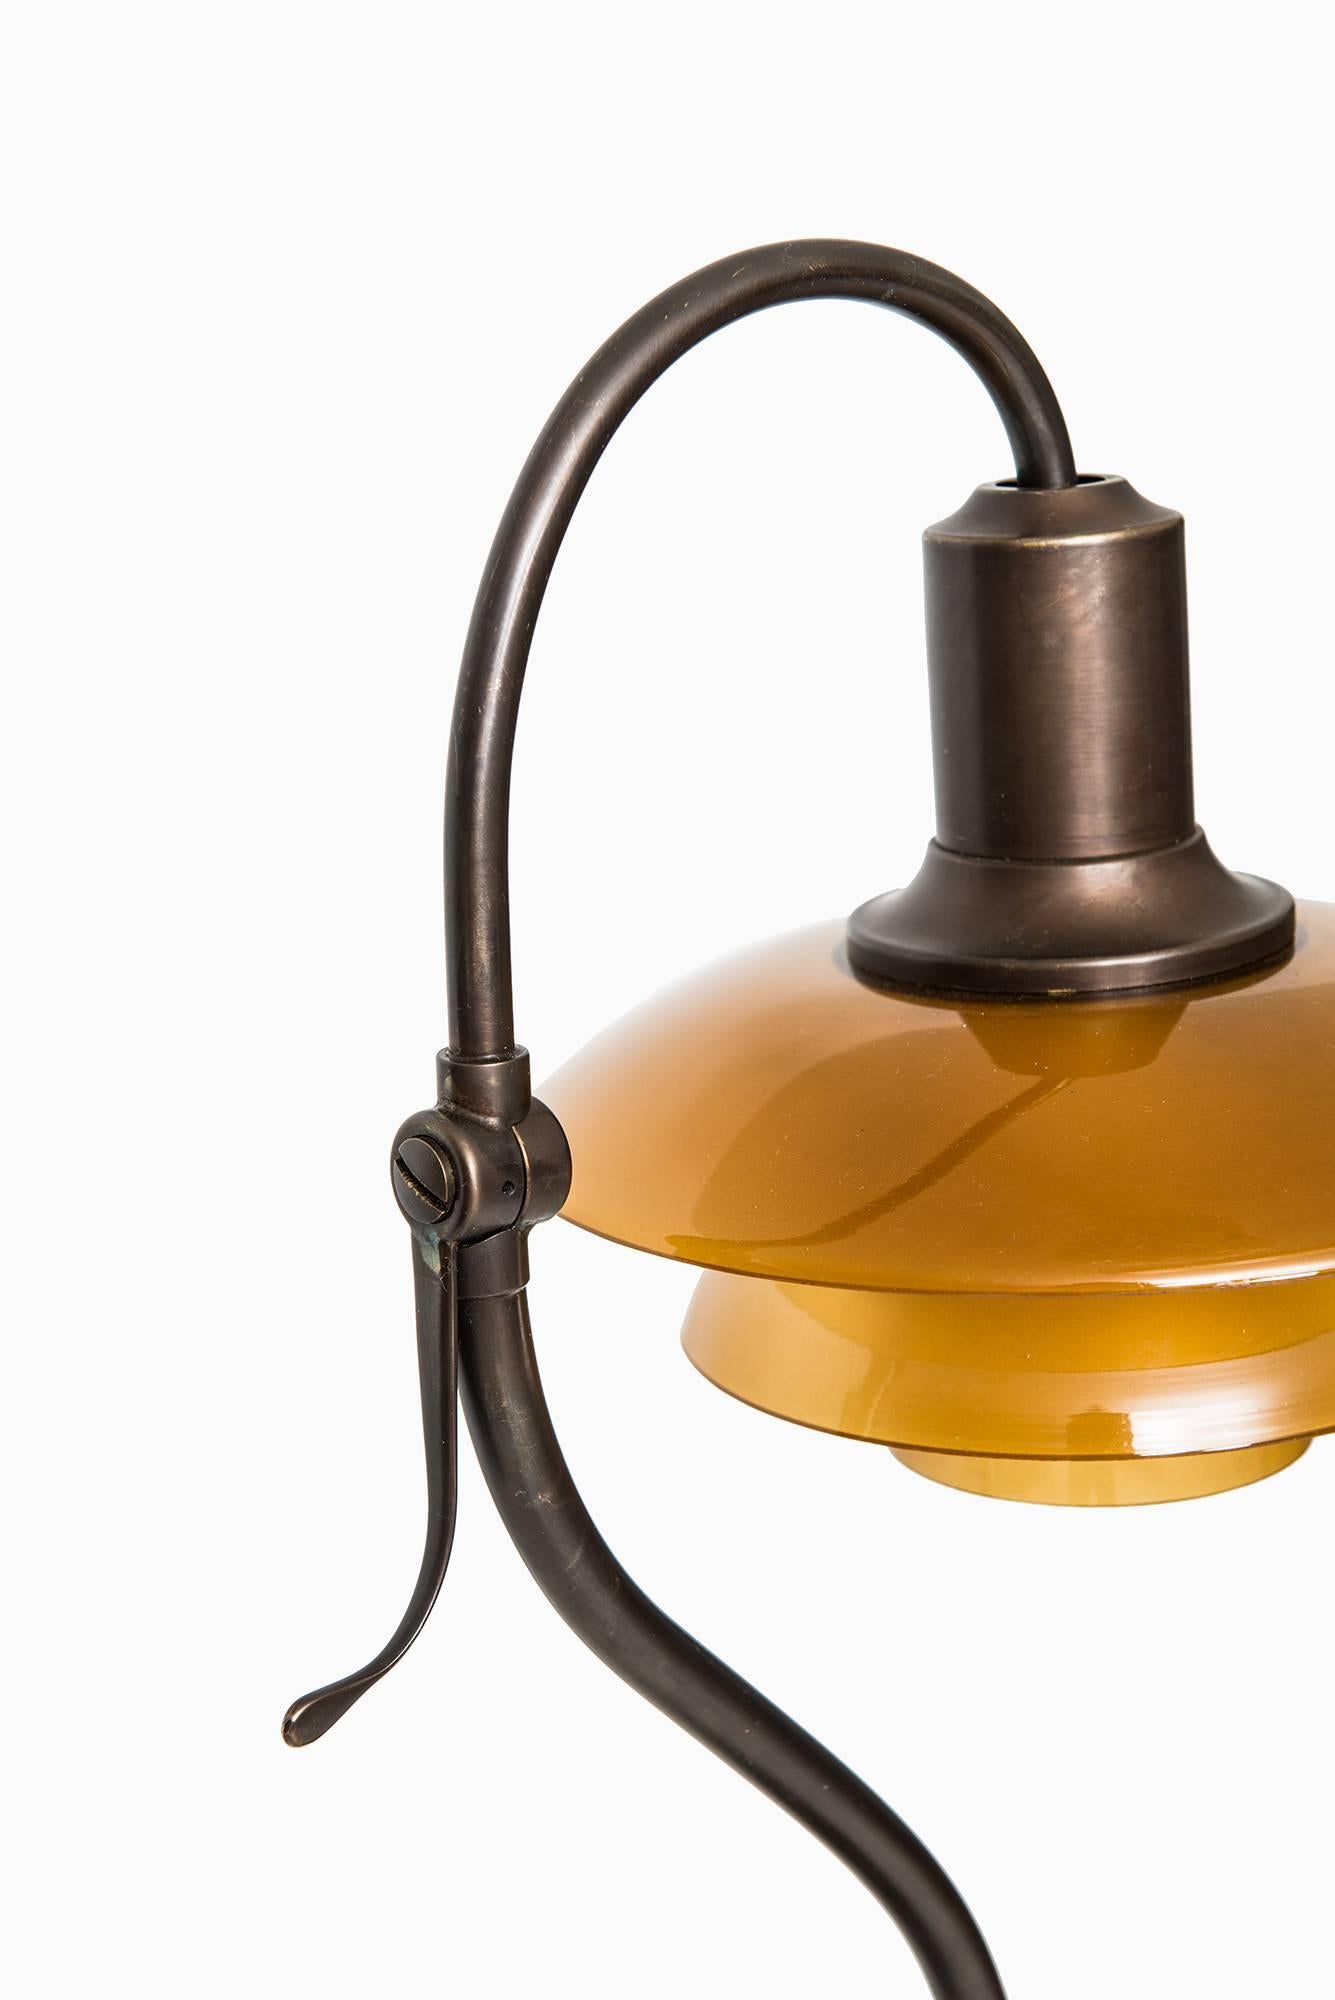 Scandinavian Modern Poul Henningsen Table Lamp Model PH-2/2 by Louis Poulsen in Denmark